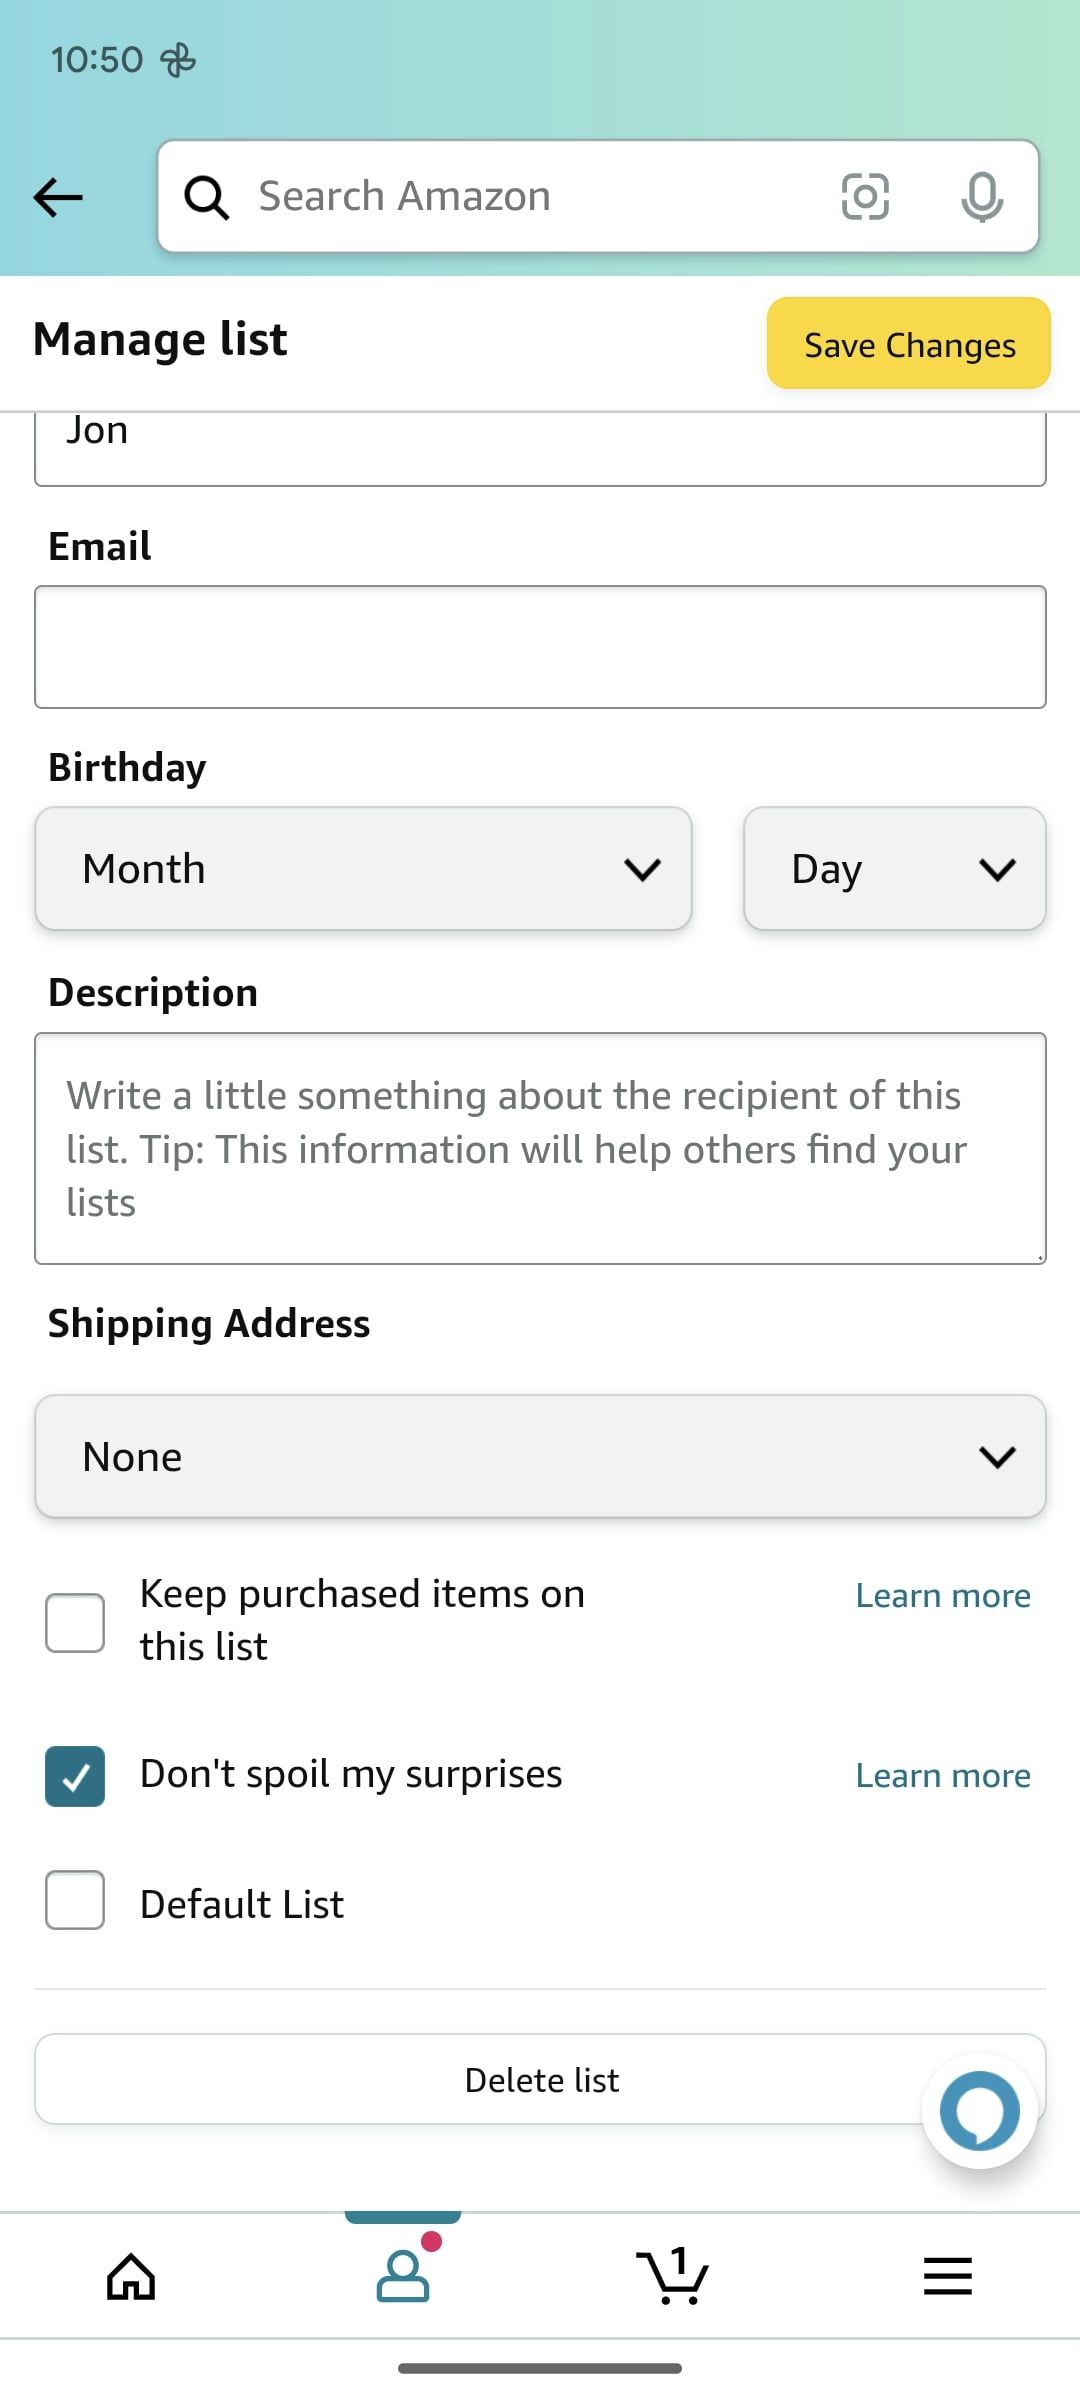 How To Share Amazon Wish List: Easy Method - Hitech